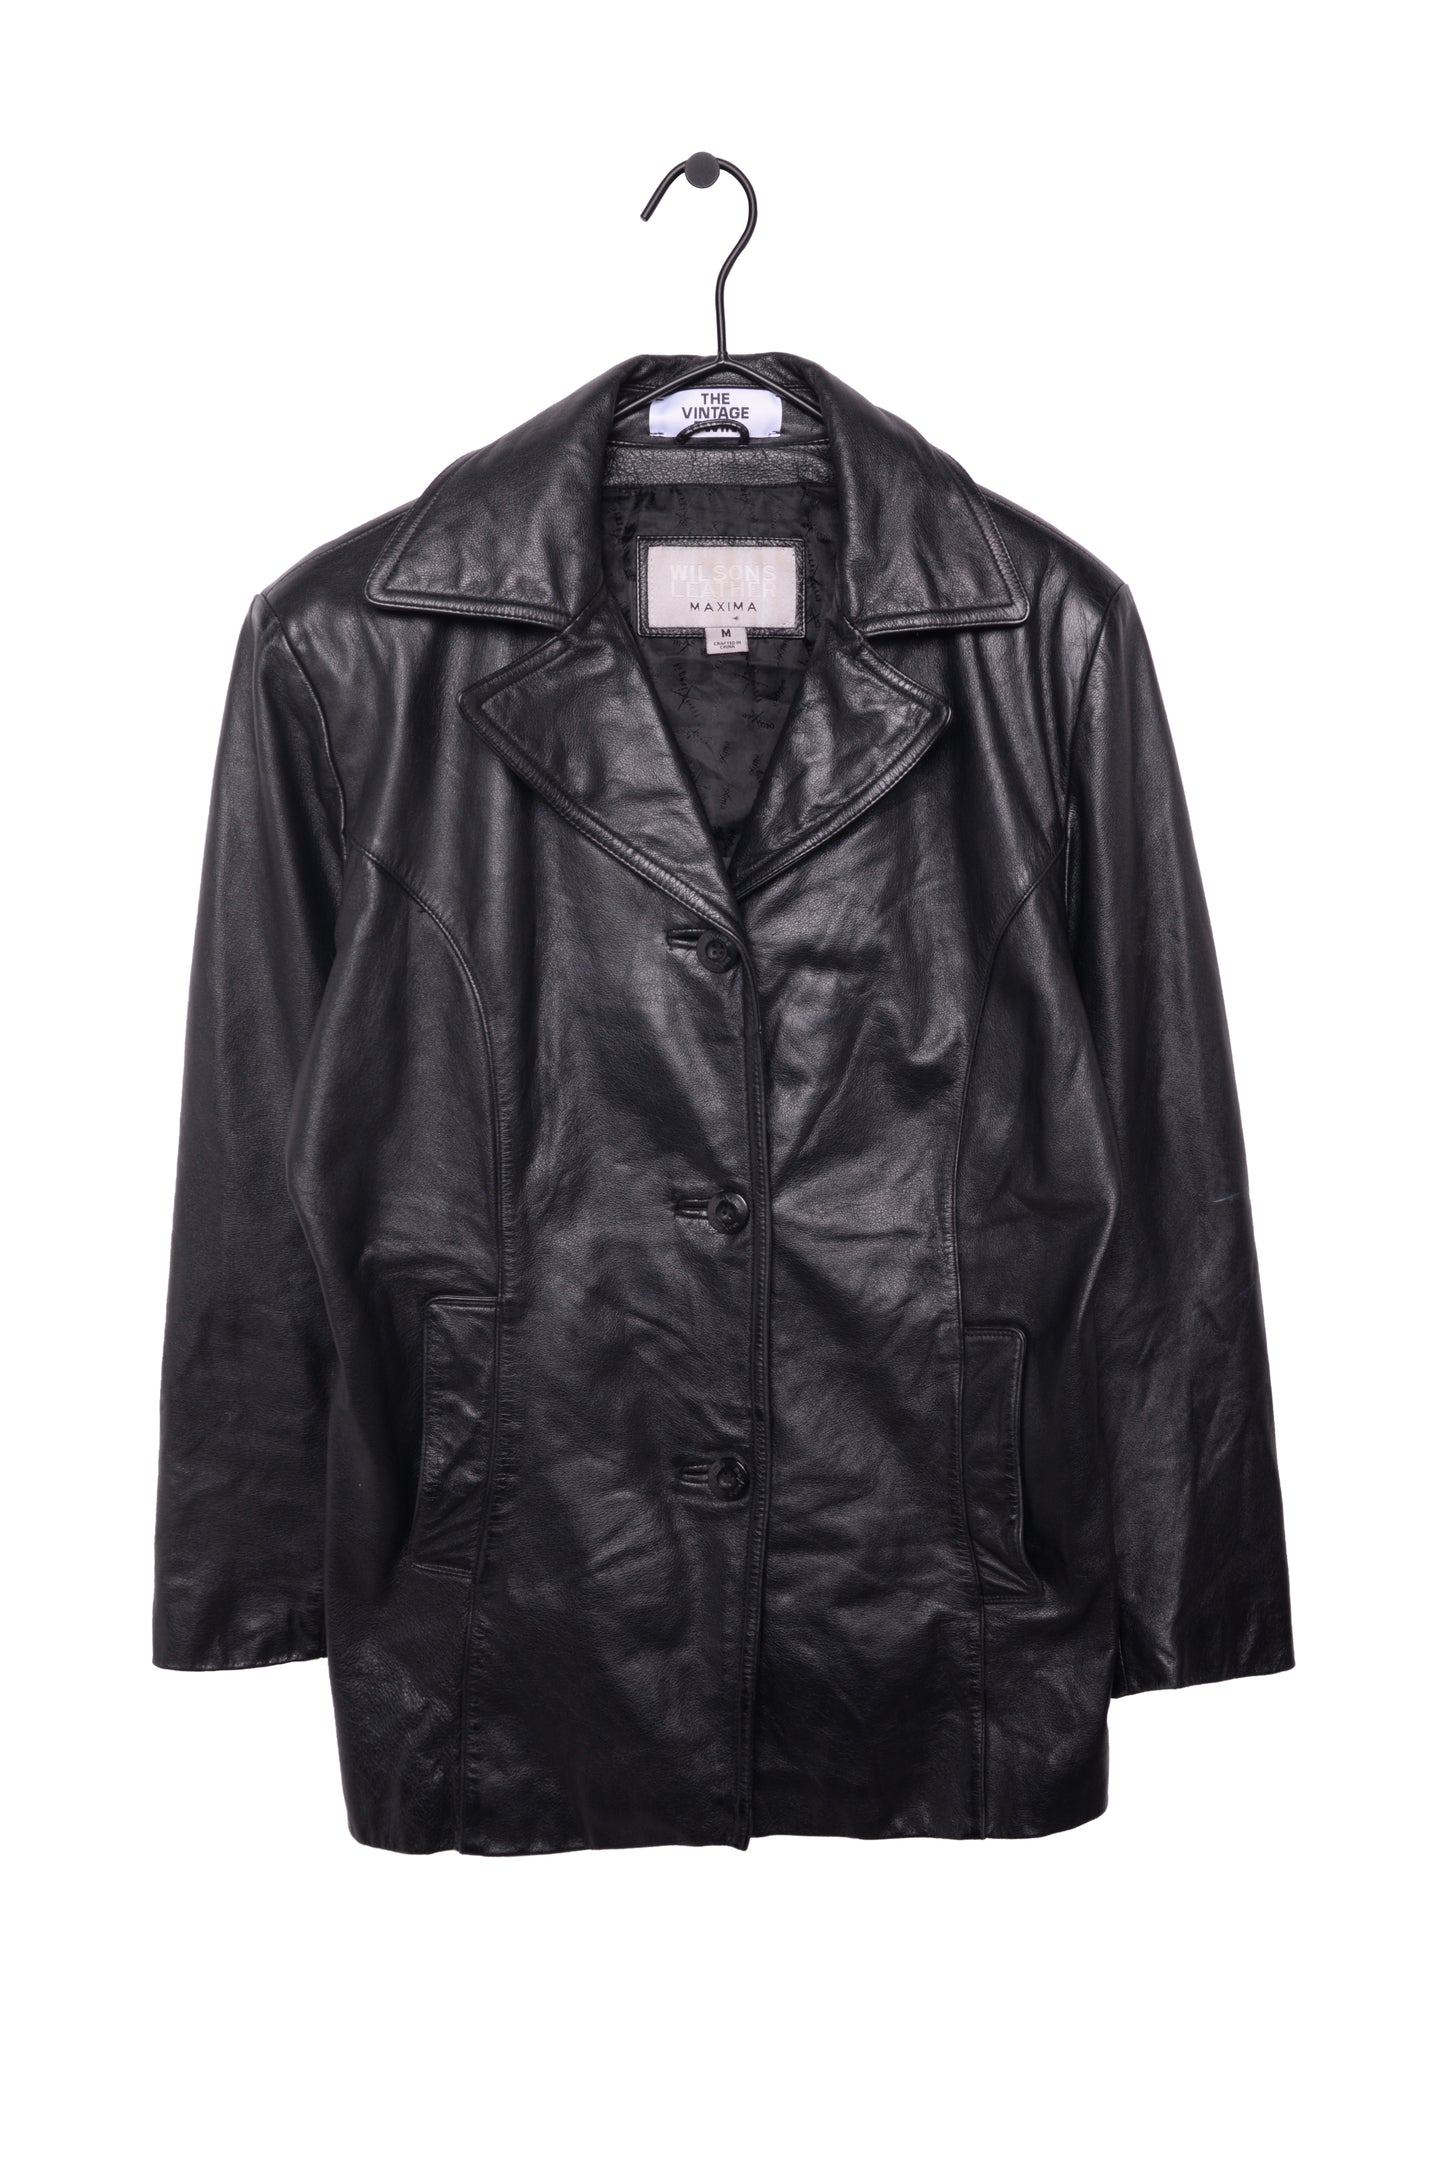 Wilson's Soft Leather Jacket